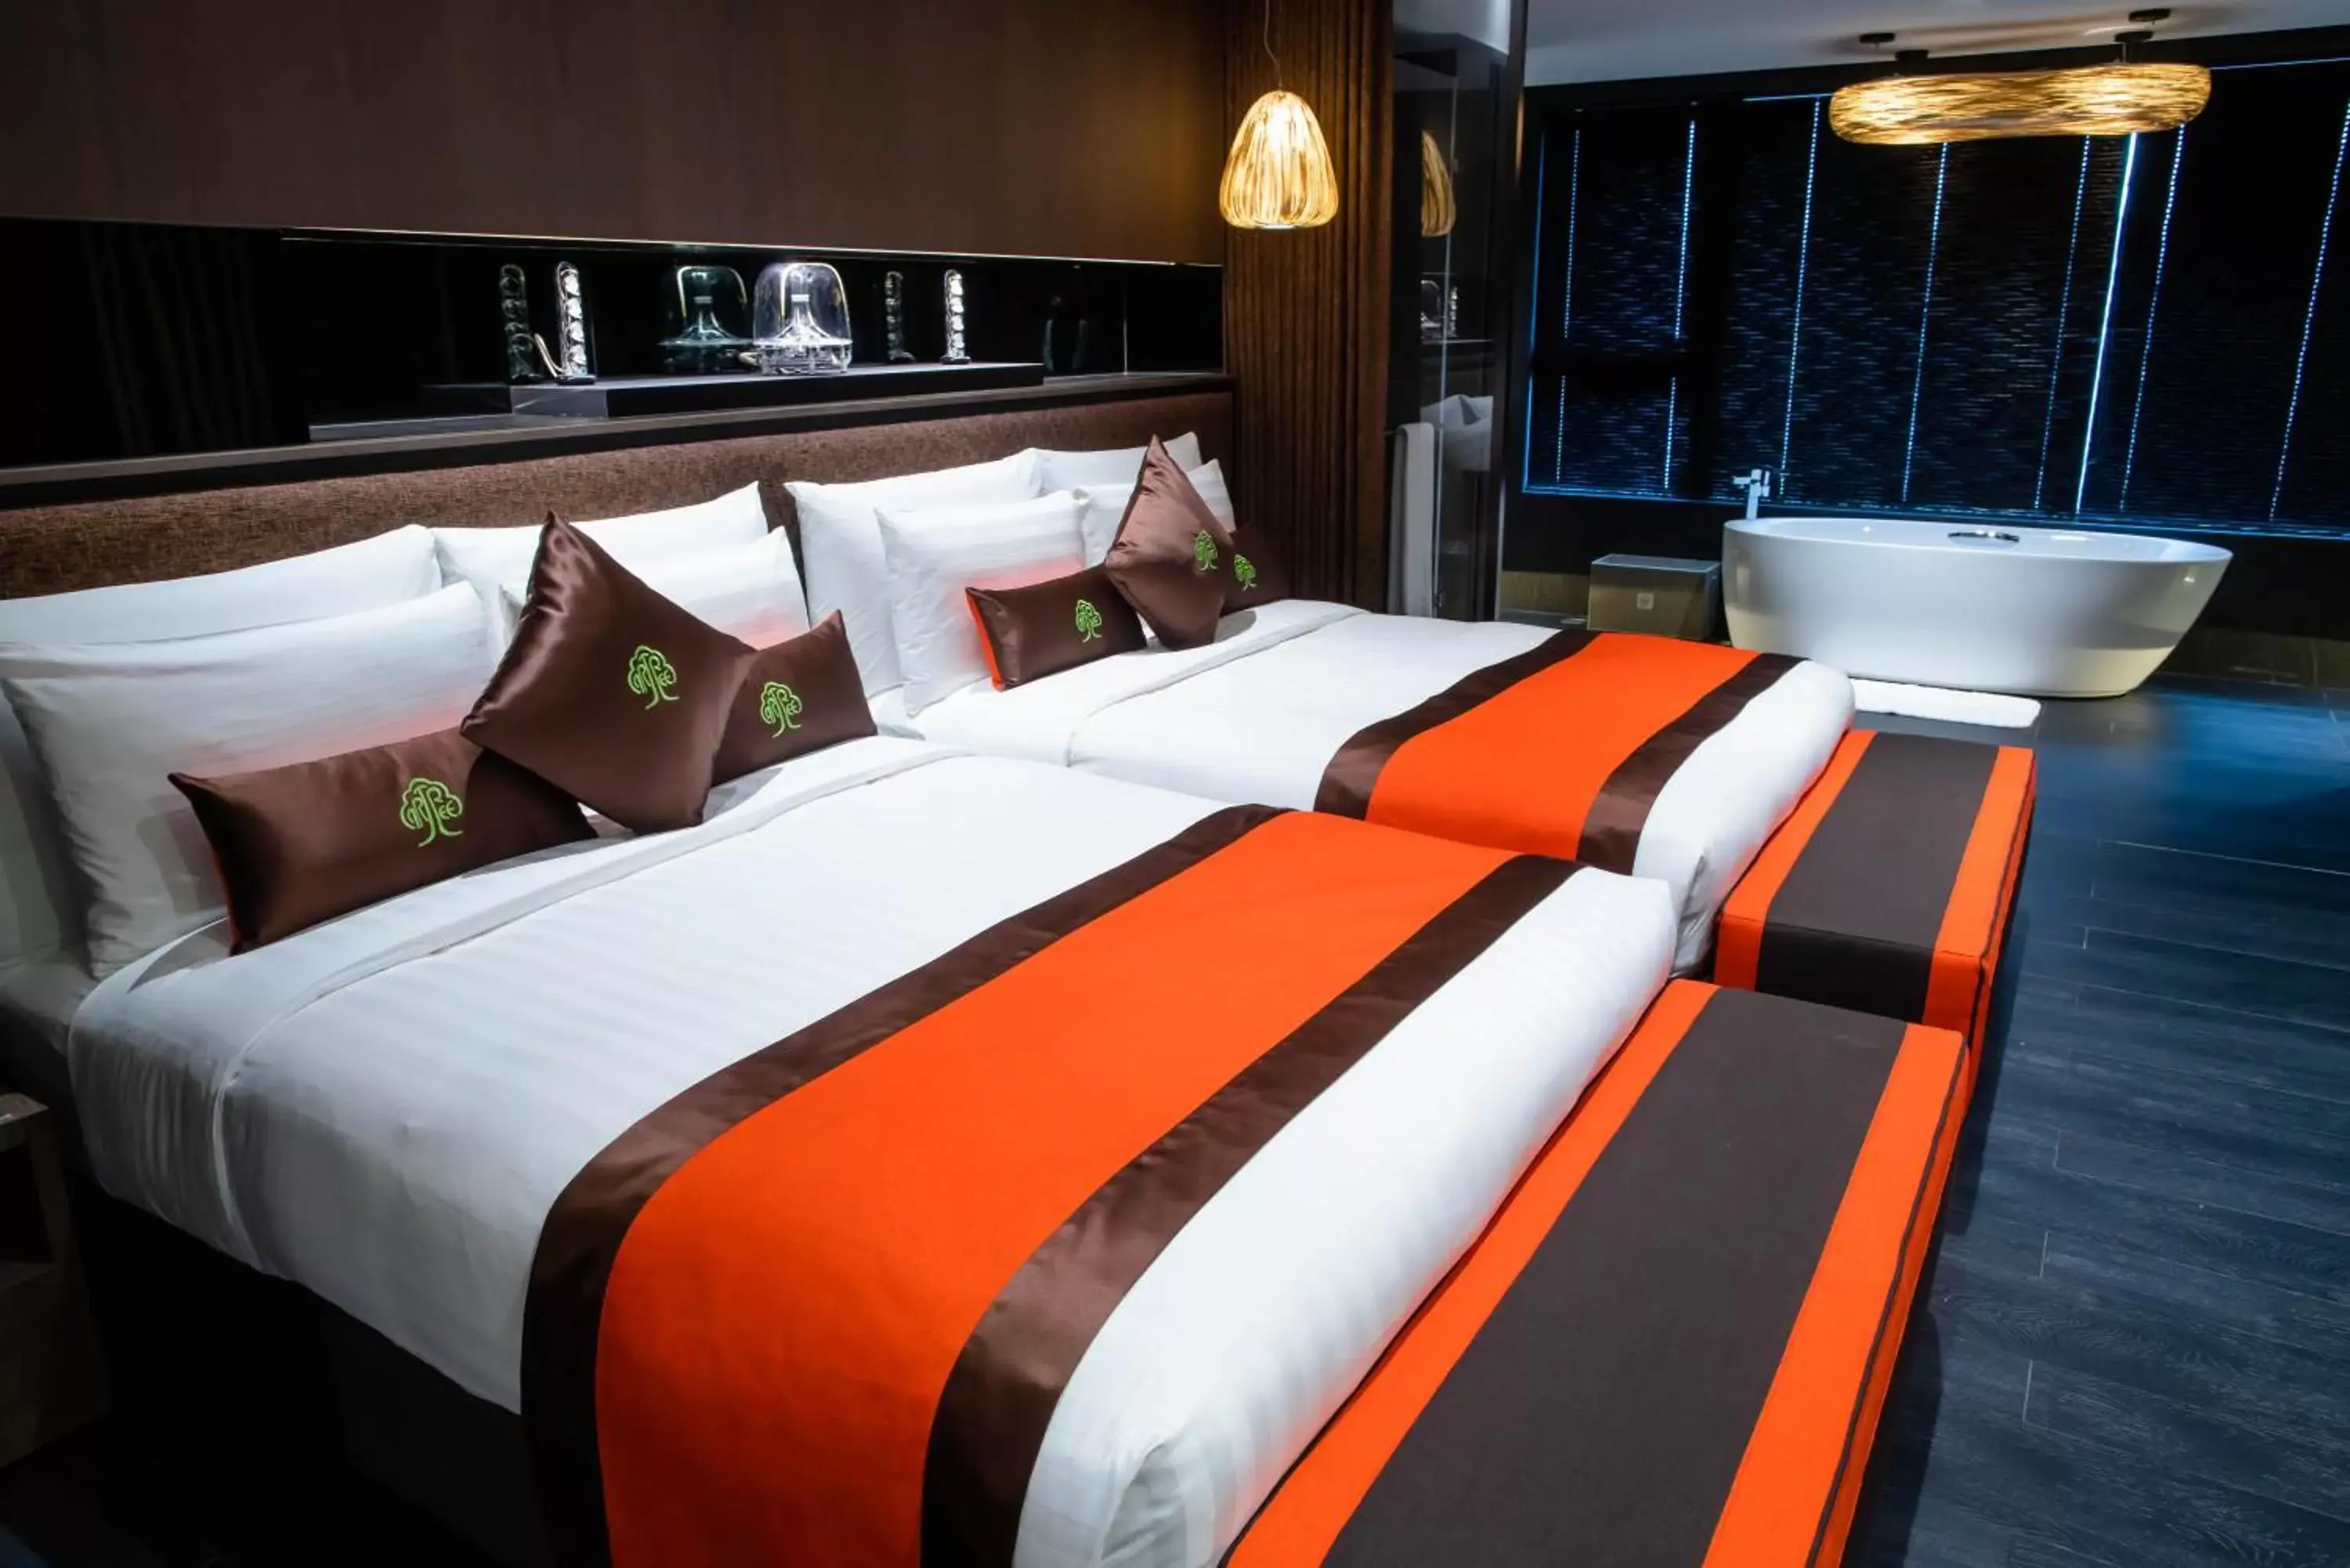 Bed in arTree hotel